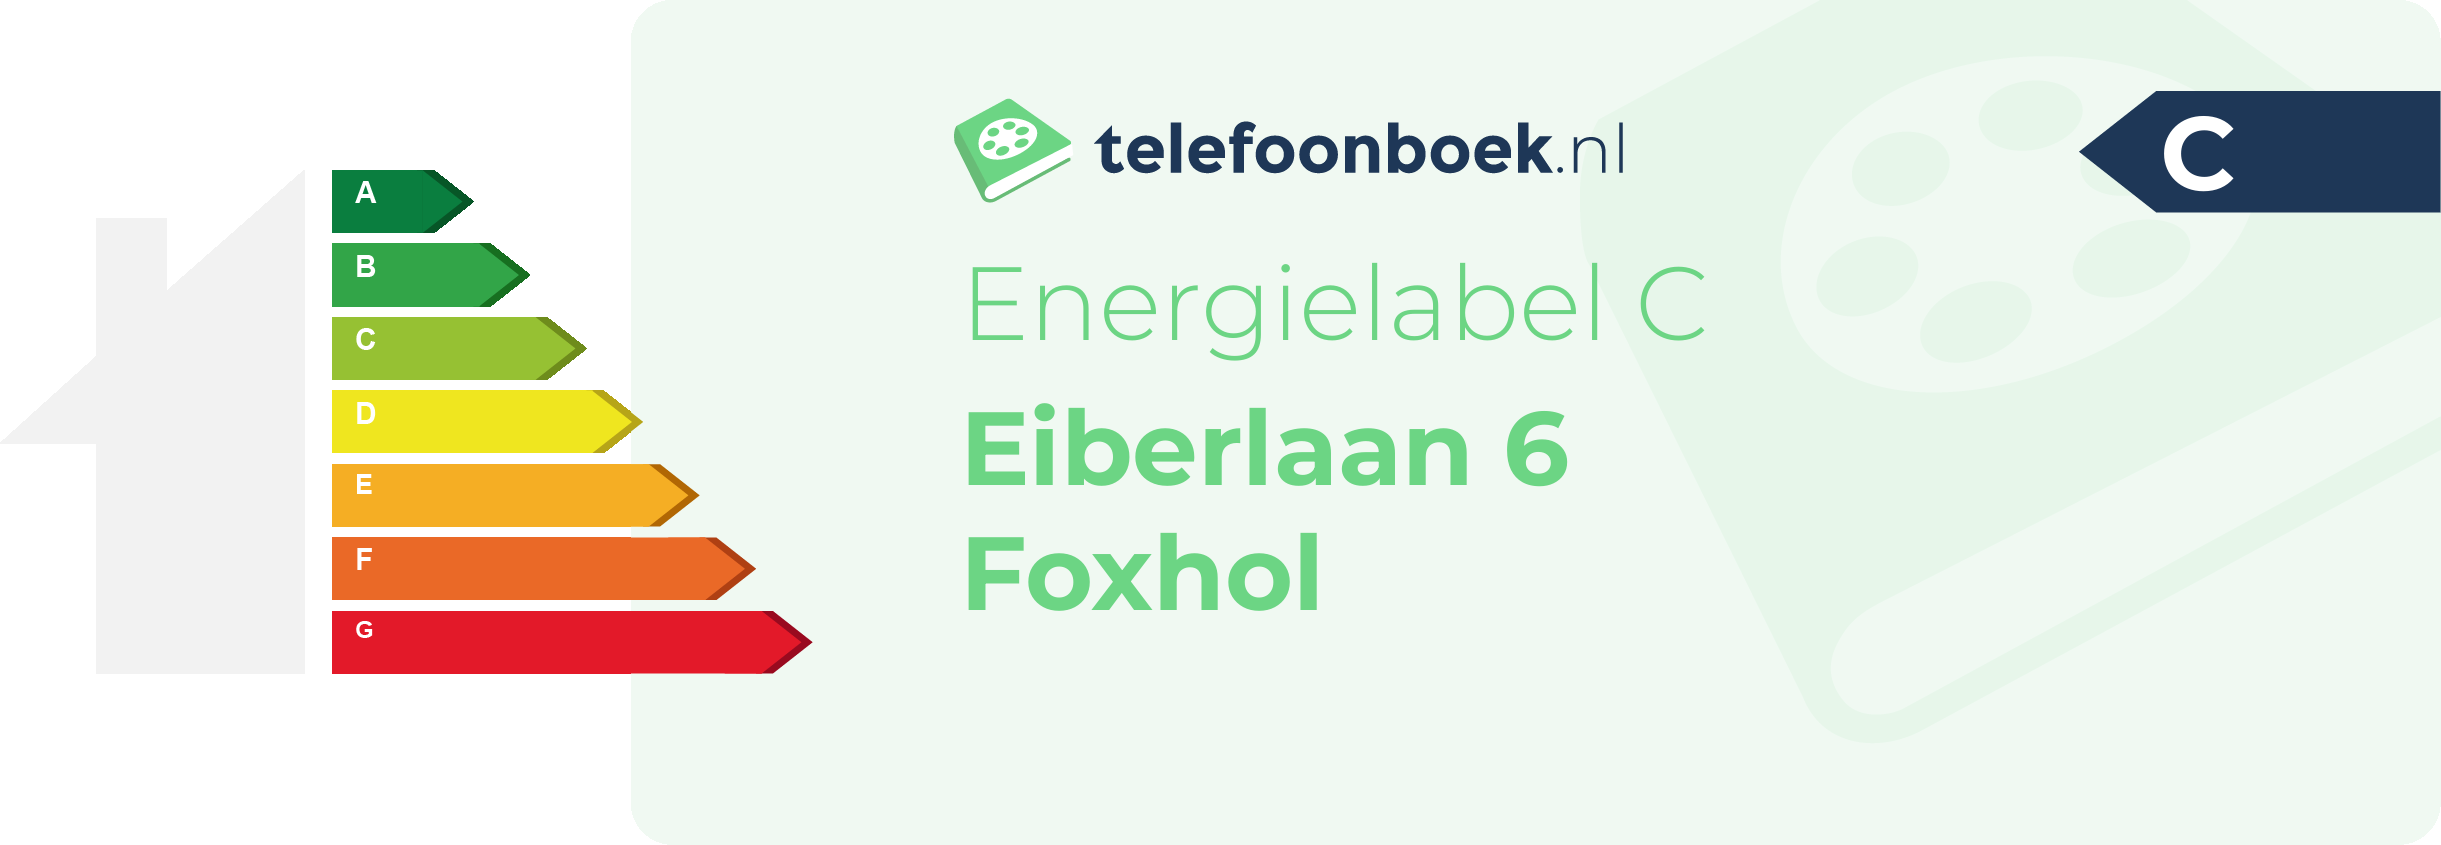 Energielabel Eiberlaan 6 Foxhol